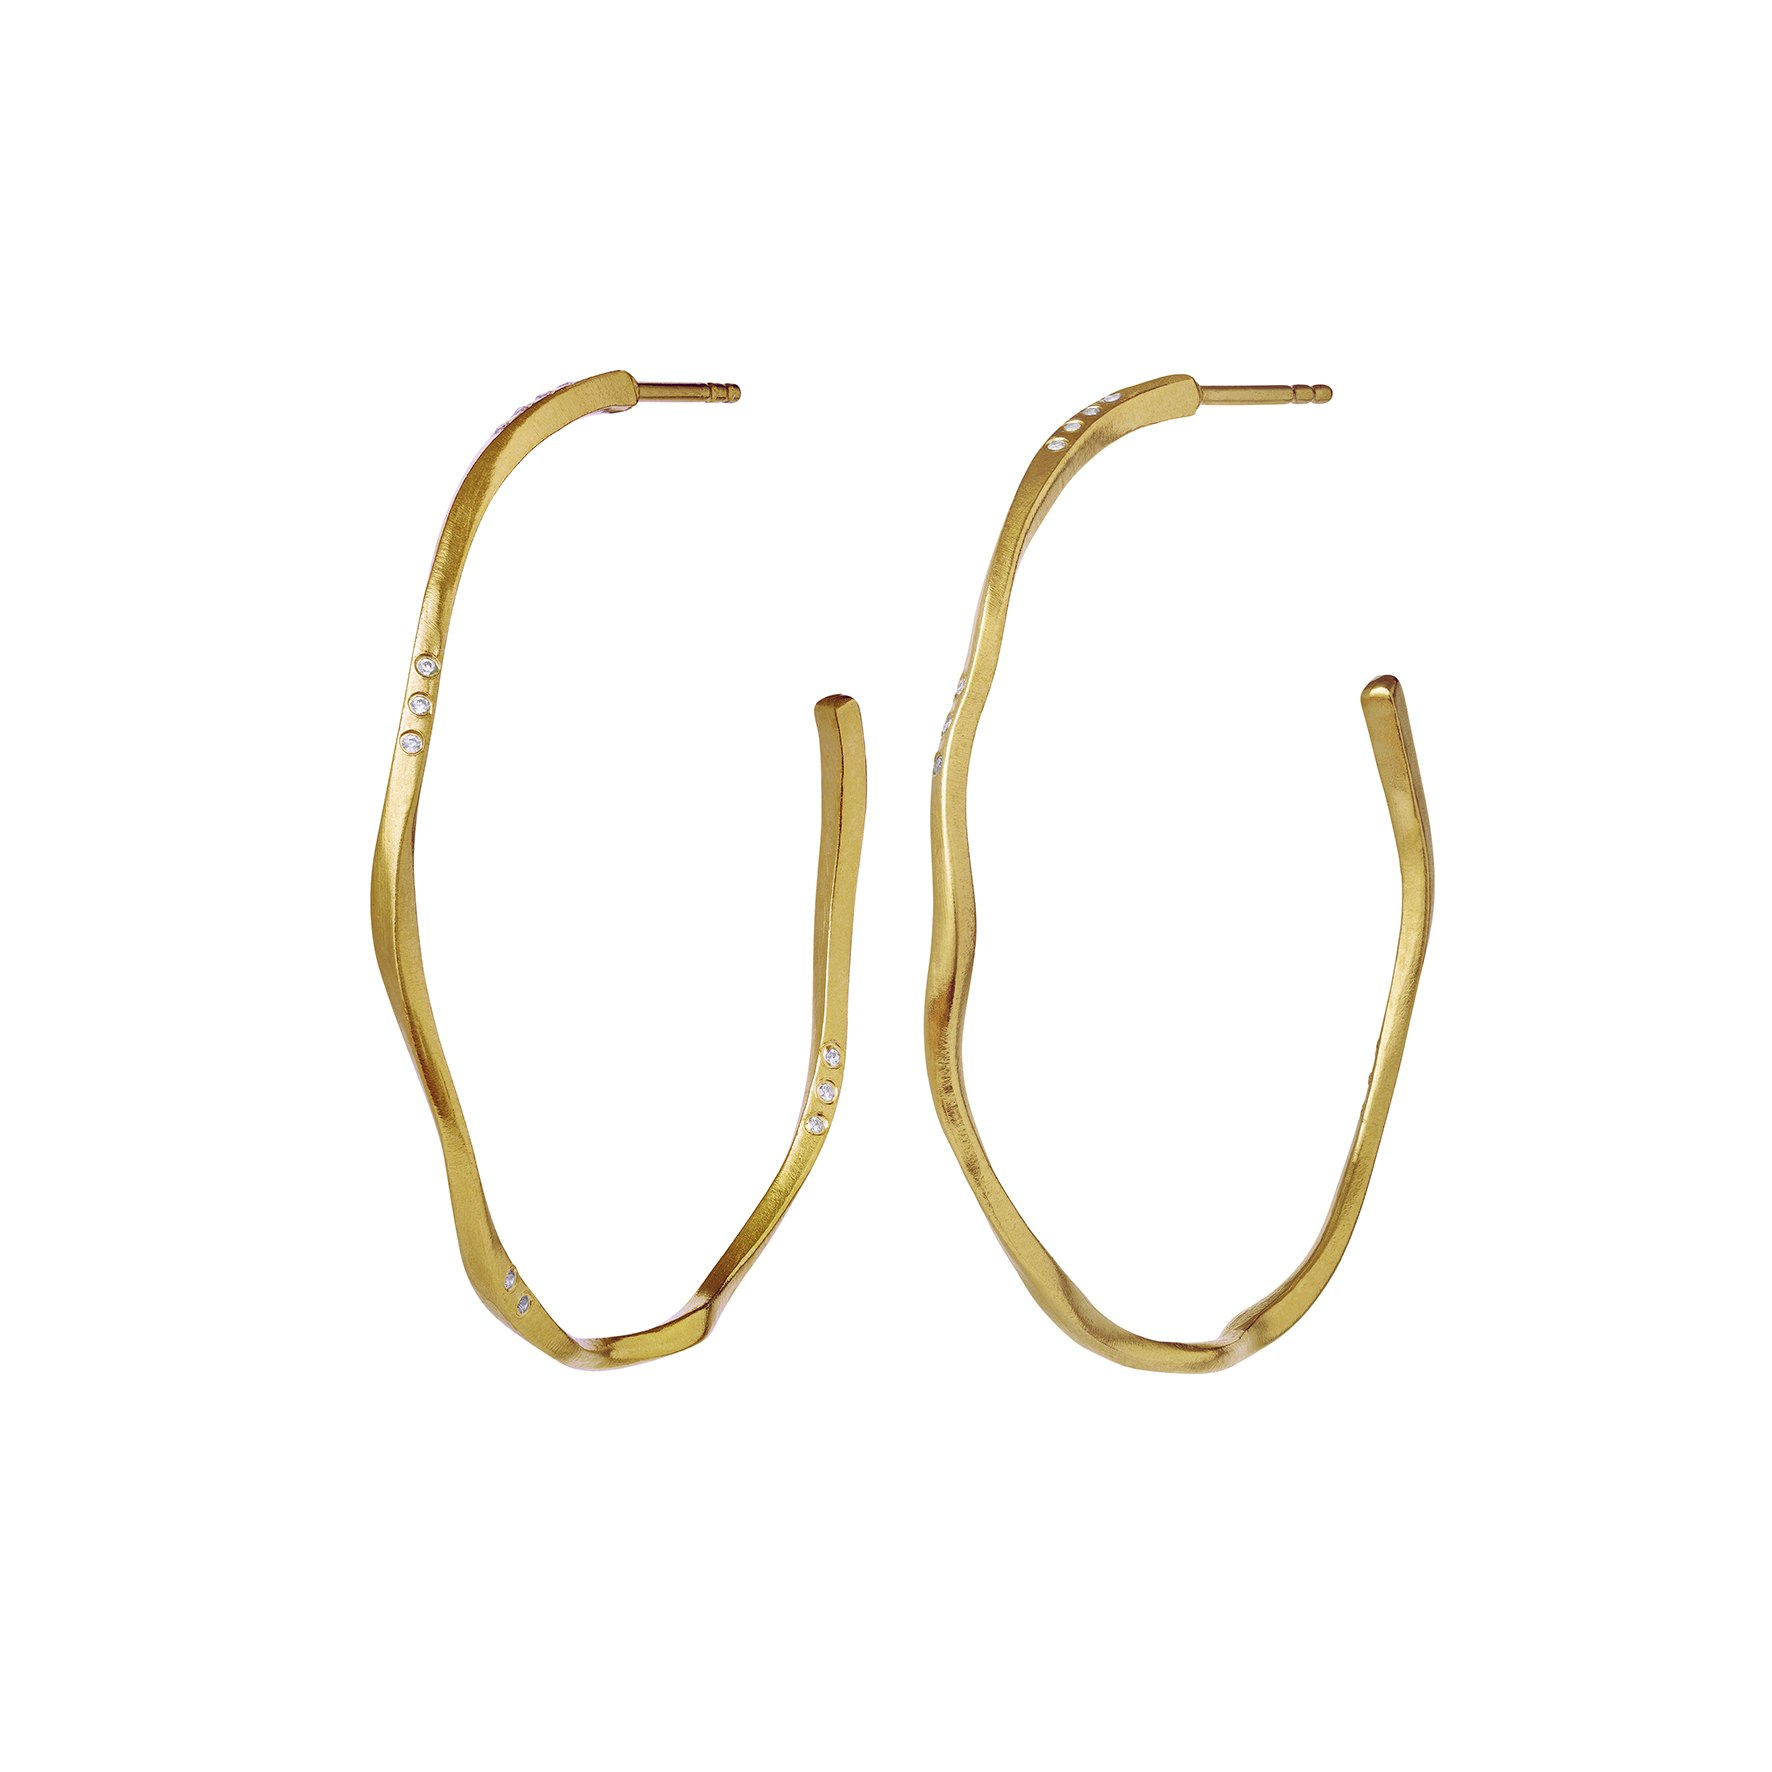 Echo Grande Earrings von Maanesten in Vergoldet-Silber Sterling 925